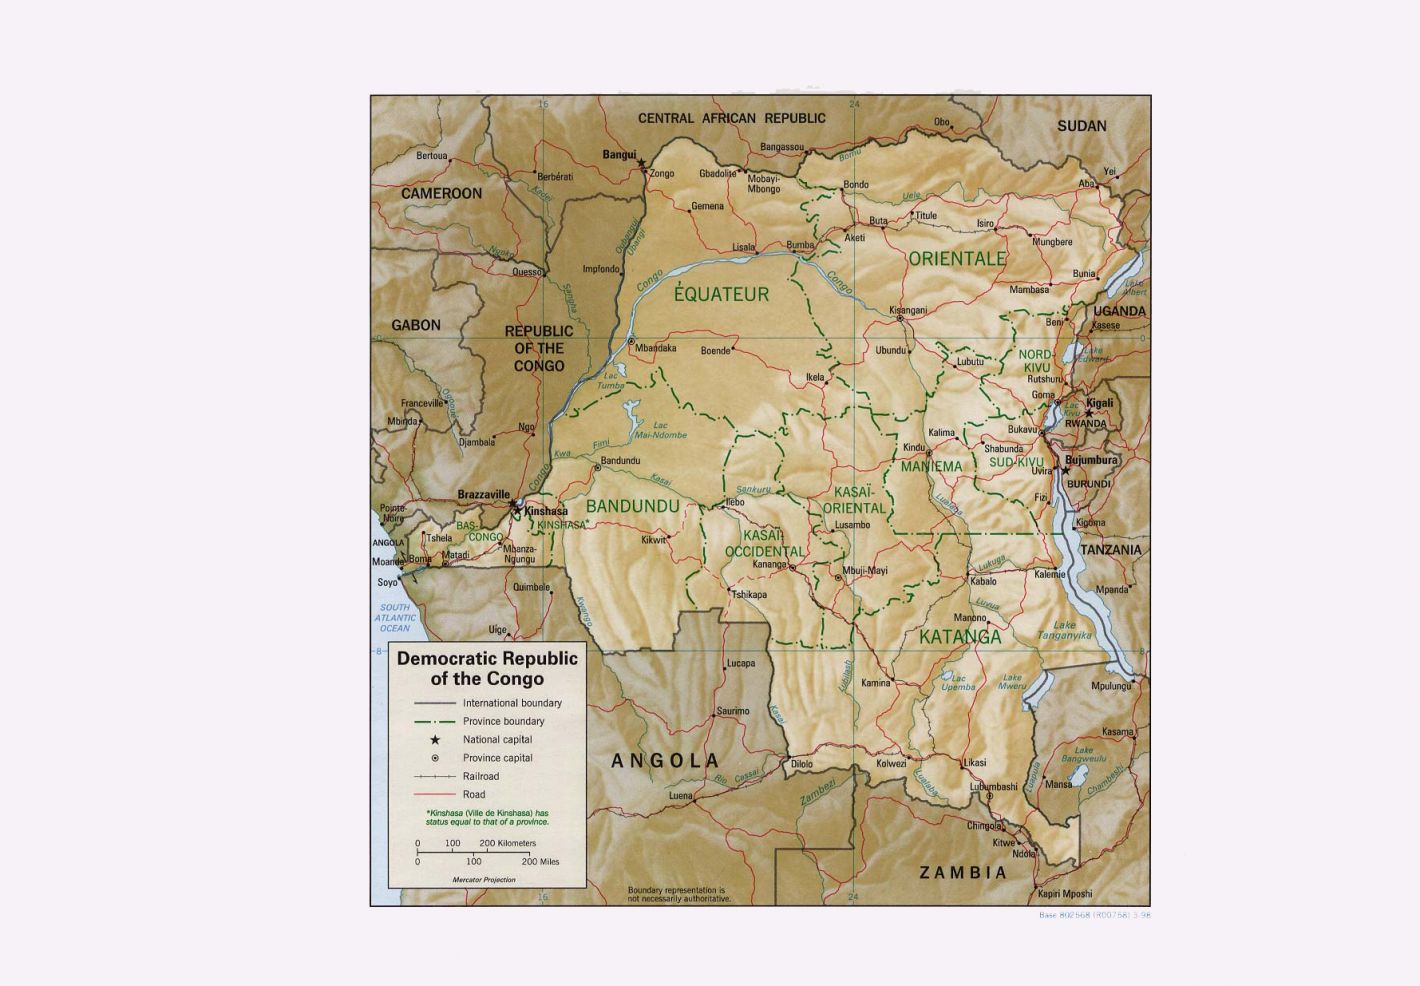 Congo_Democratic_Republic_Map - Perry-Castañeda Library Map Collection - Wikimedia Commons - Public Domain